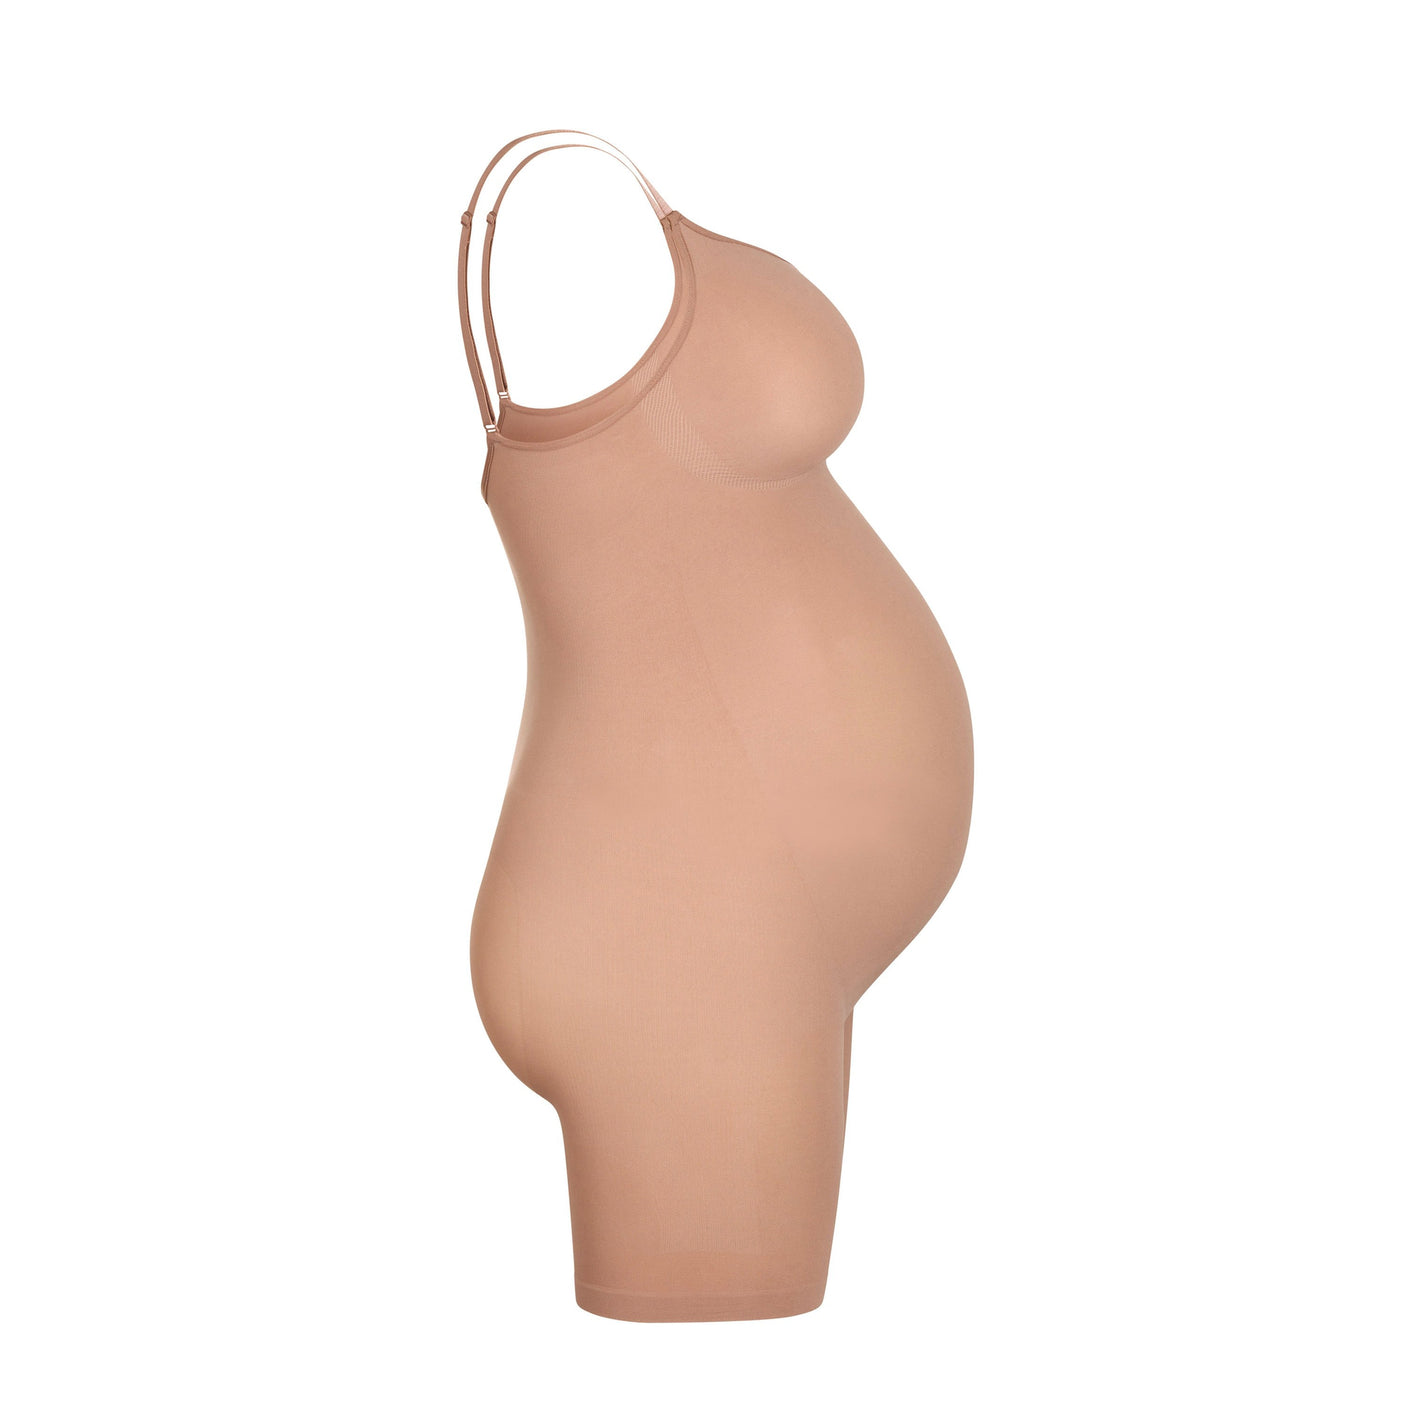 Smoothing maternity shapewear for baby shower? : r/BabyBumps